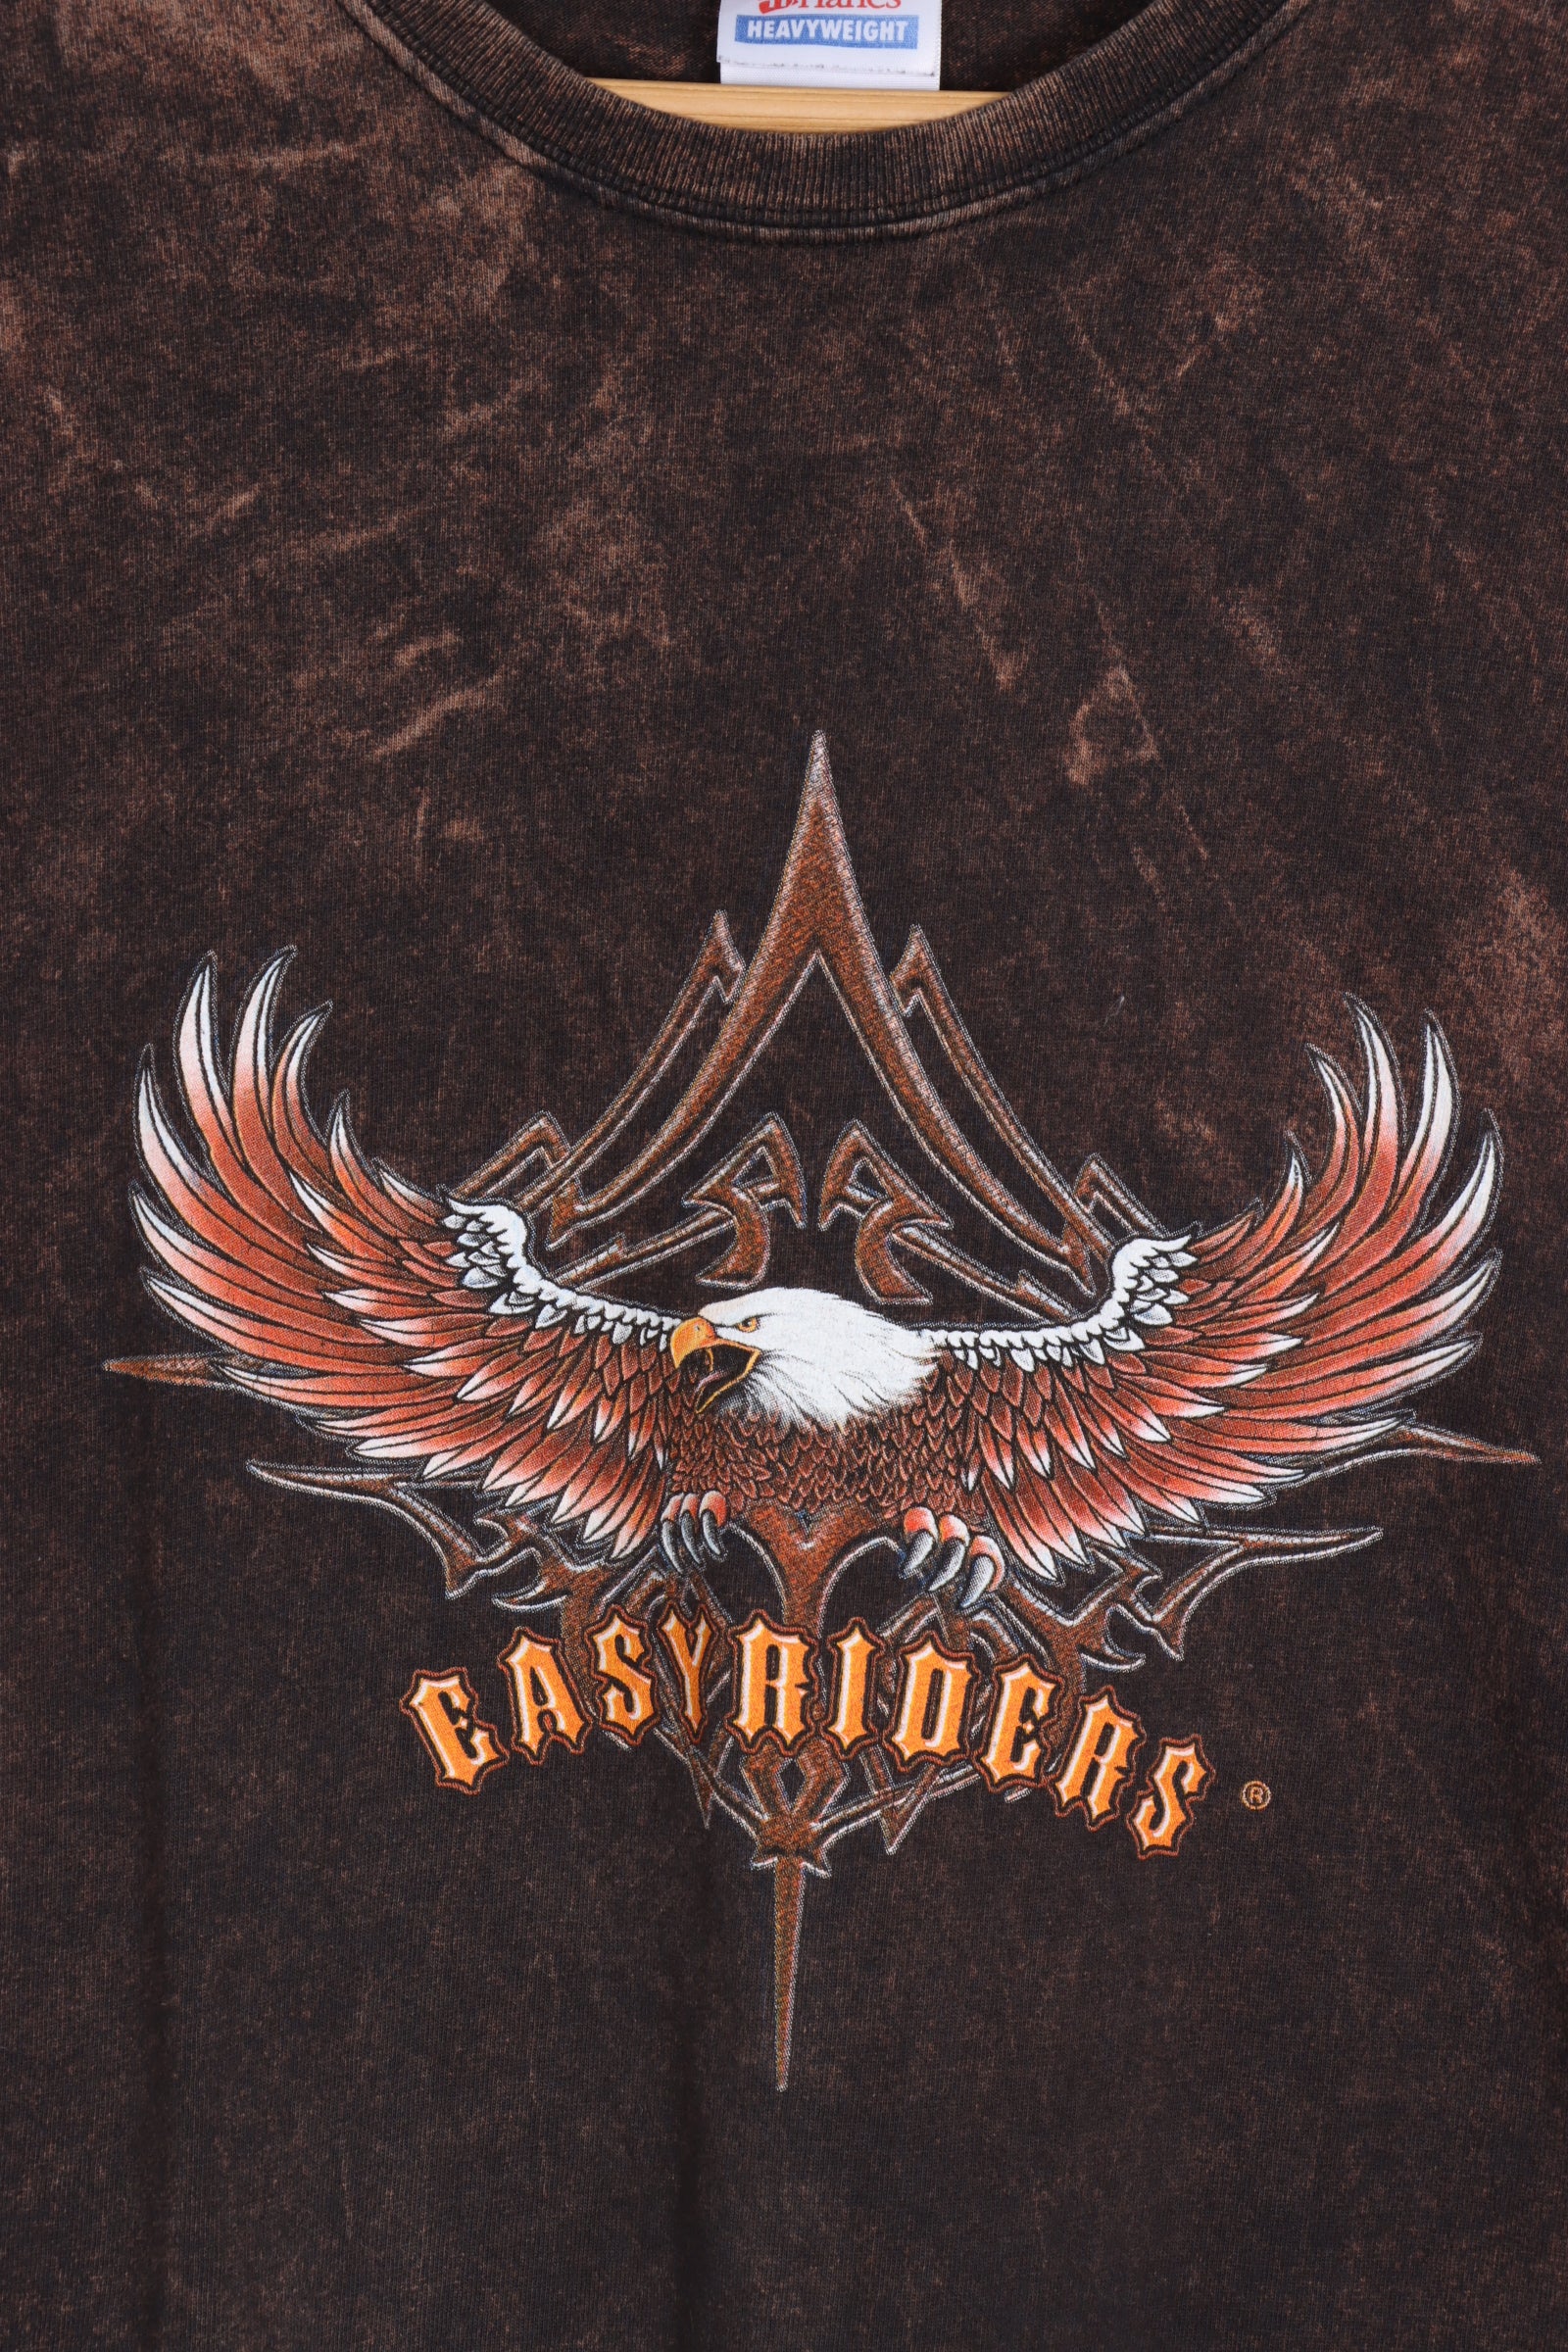 Easyriders Motorcycle Magazine Bald Eagle Rodeo Tour Acid Wash Tee ...